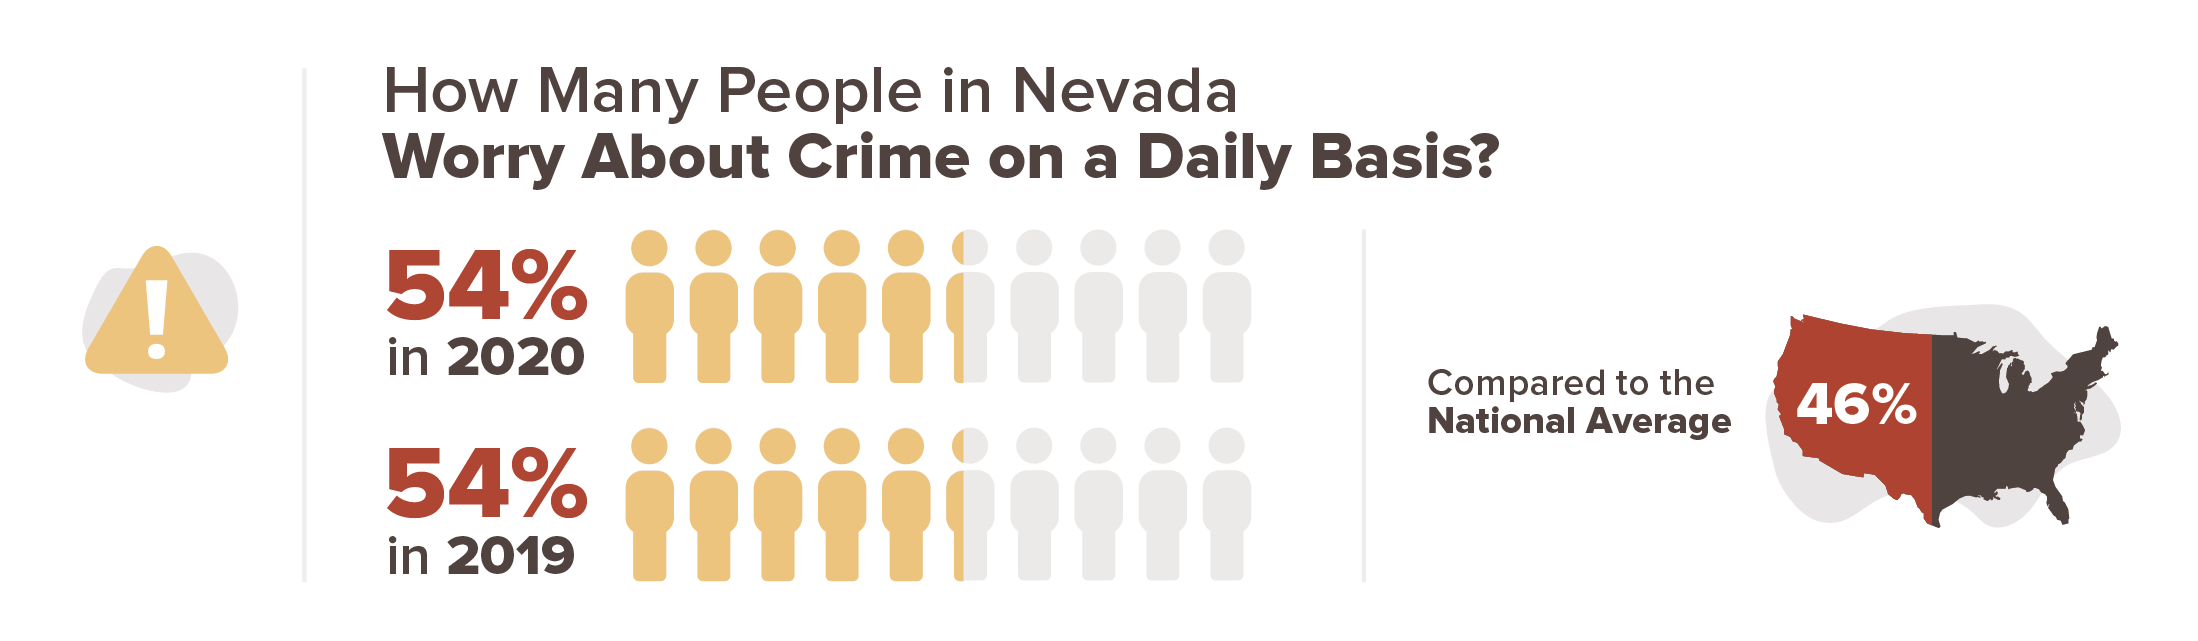 Nevada crime concern infographic